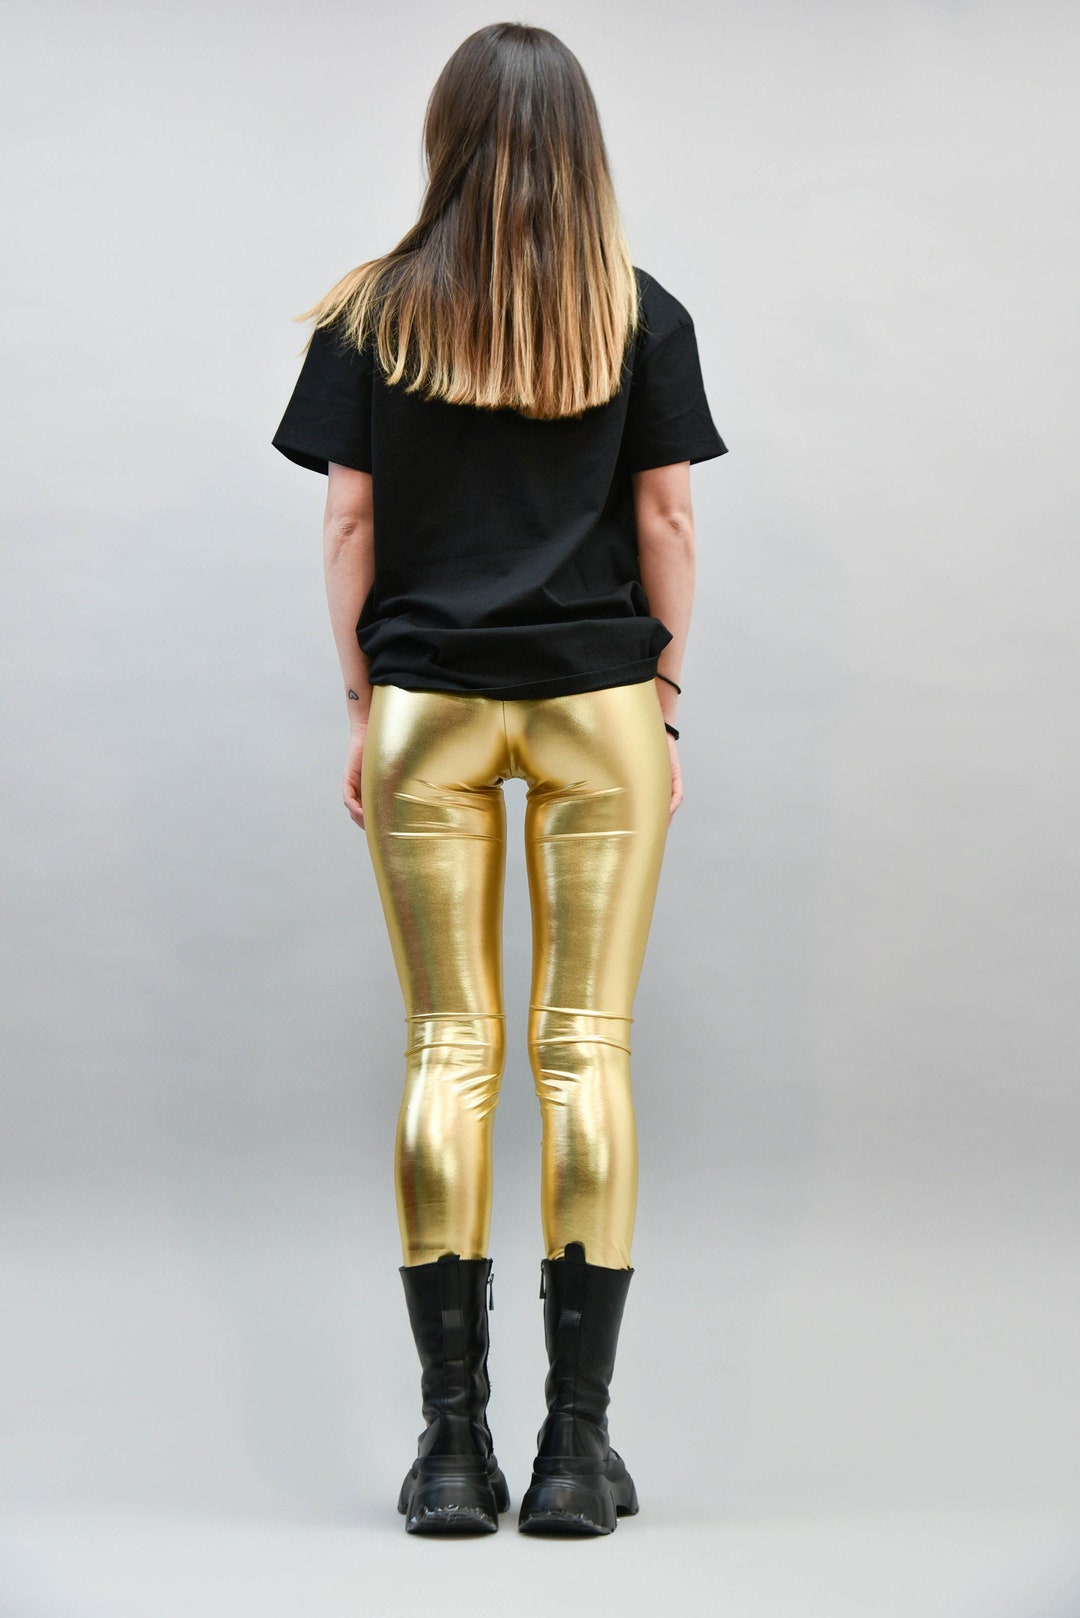 Gold Stretch Pants/metallic Gold Leggings/disco - Etsy